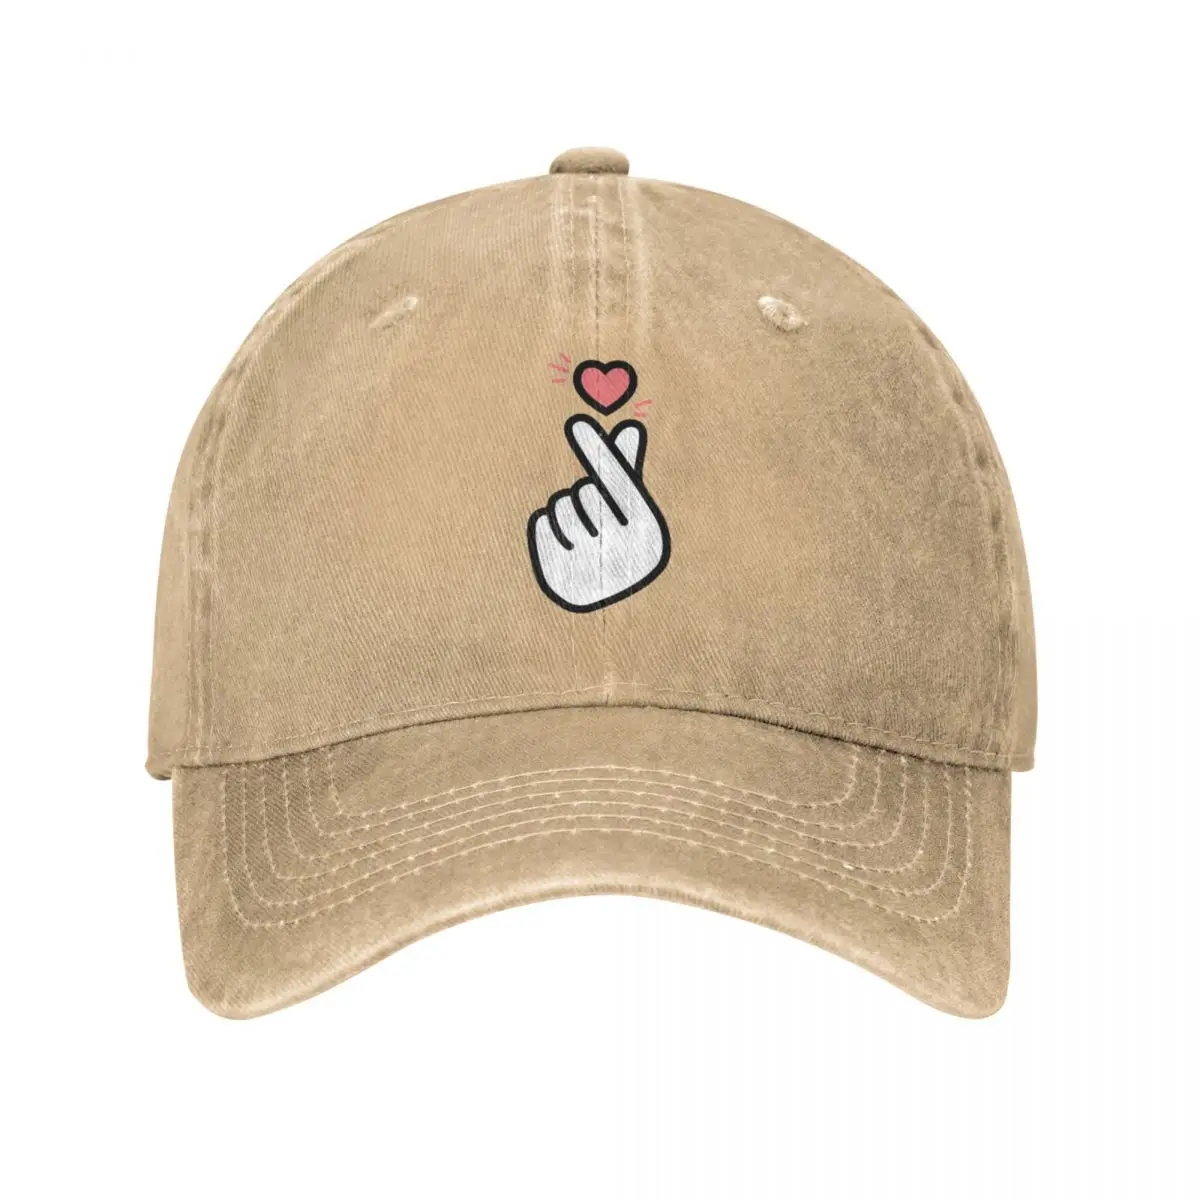 

Kpop Finger Heart - Aesthetic Cap Cowboy Hat Mountaineering Ball cap uv protection solar hat hats man Women's